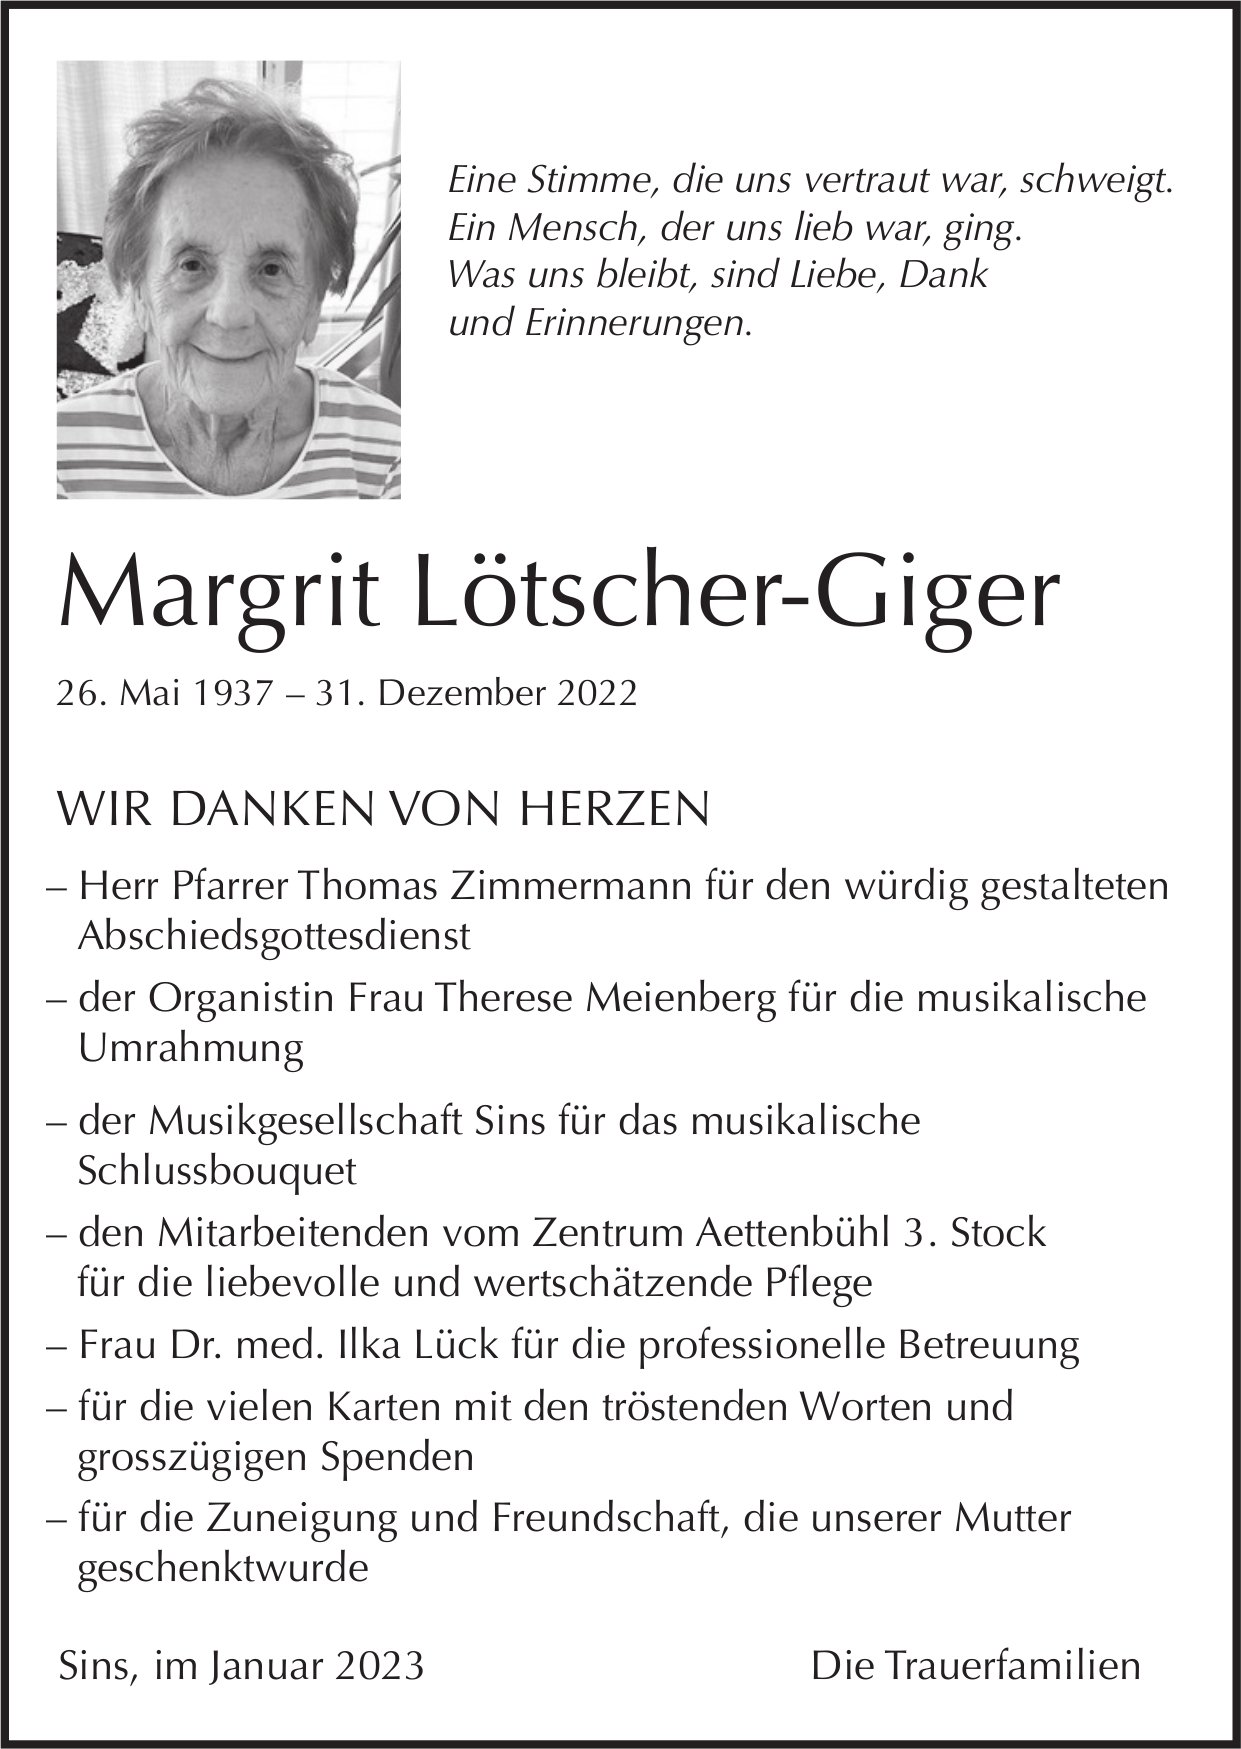 Lötscher-Giger Margrit, im Februar 2023 / DS